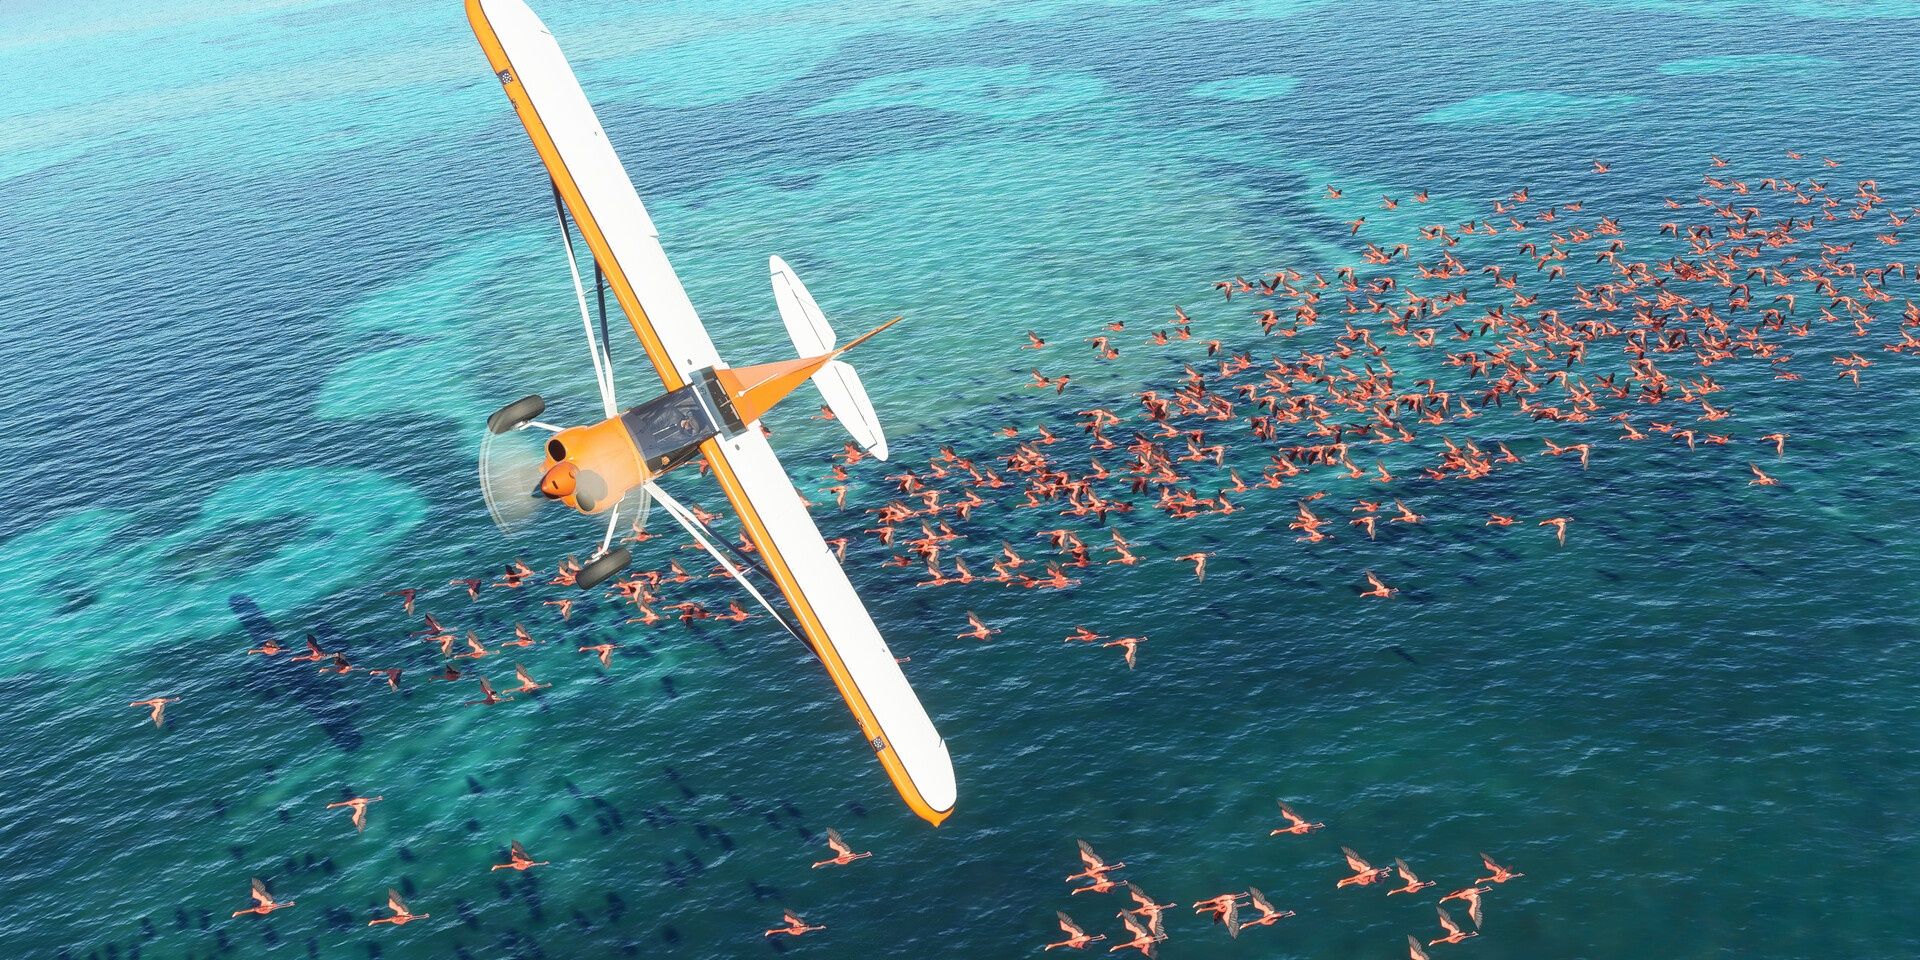 A plane flying over an ocean as birds fly underneath it in Microsoft Flight Simulator